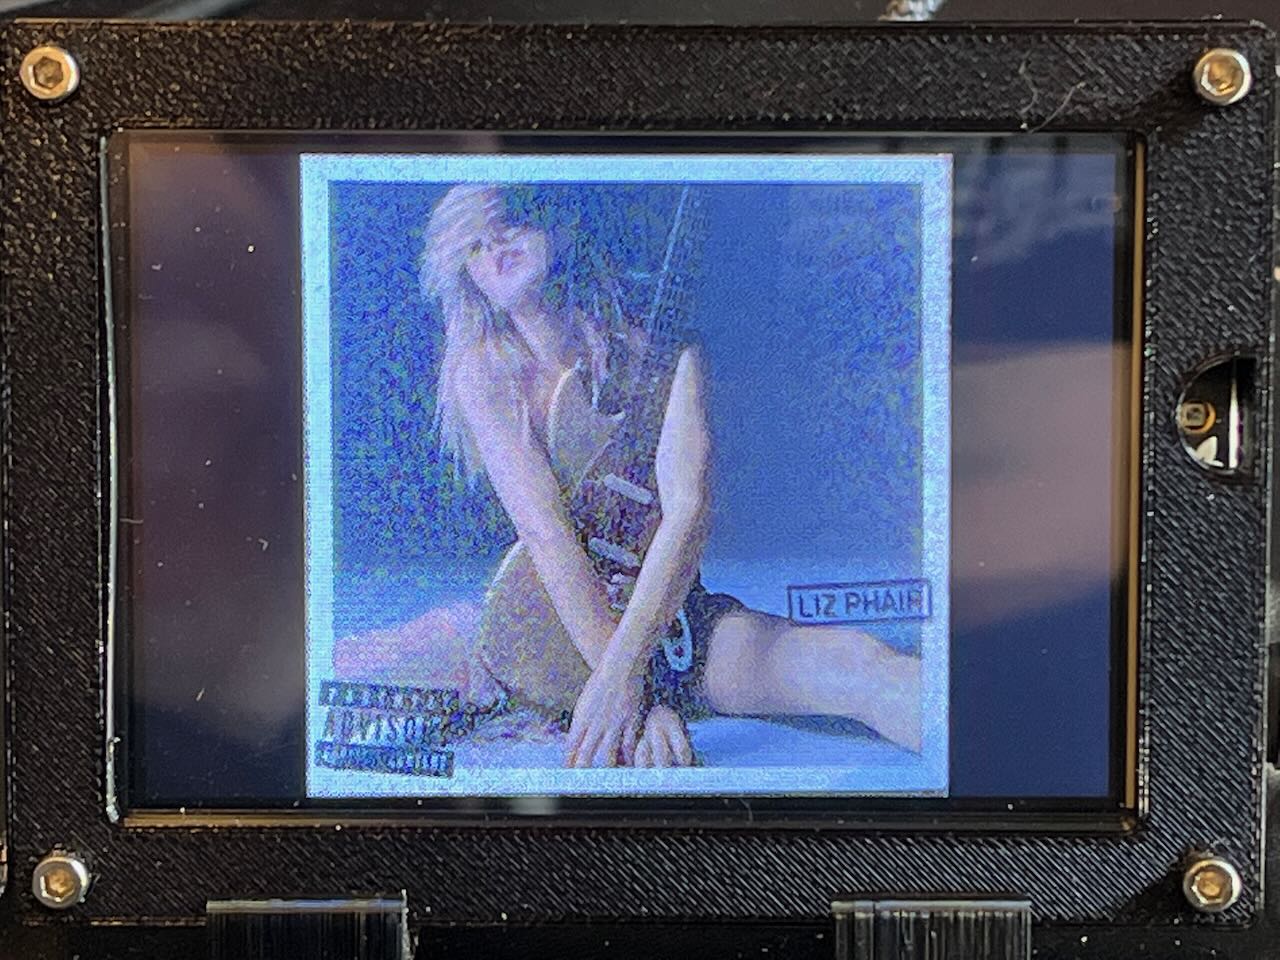 Liz Phair’s self titled album displayed on a PyPortal